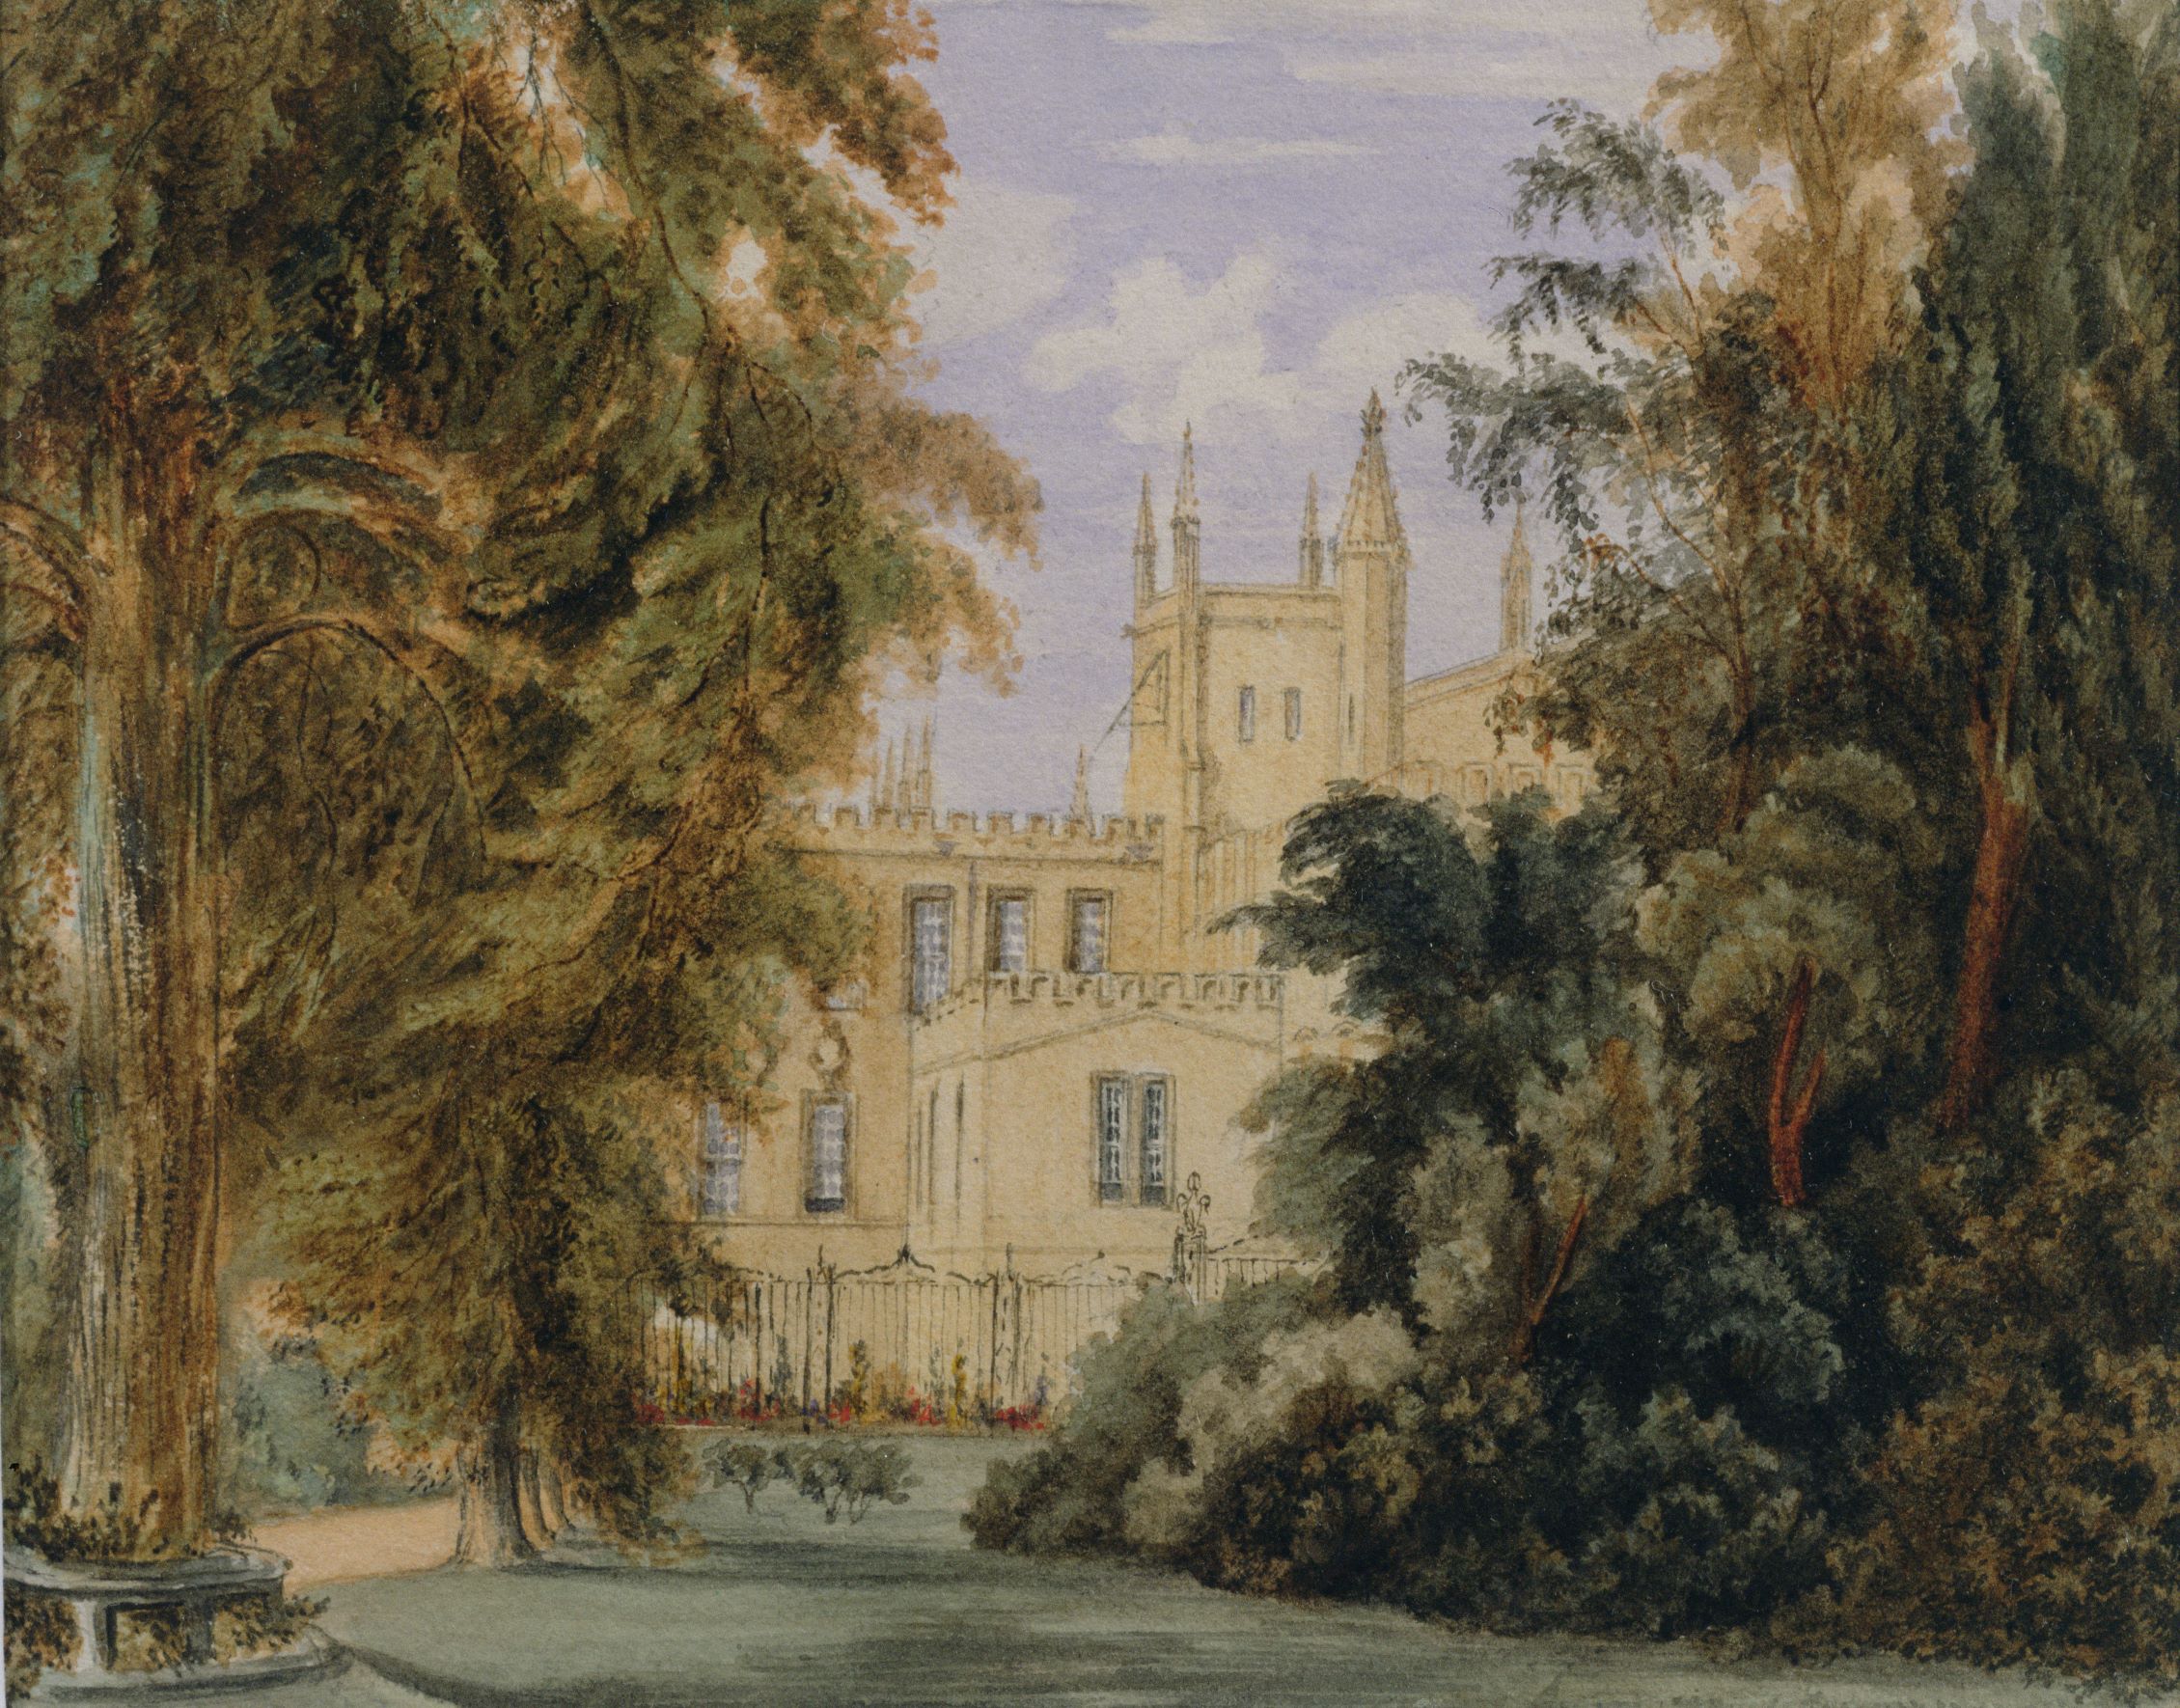 The Garden Quadrangle; artist: William Turner: medium: Oil on Canvas; date:1877.